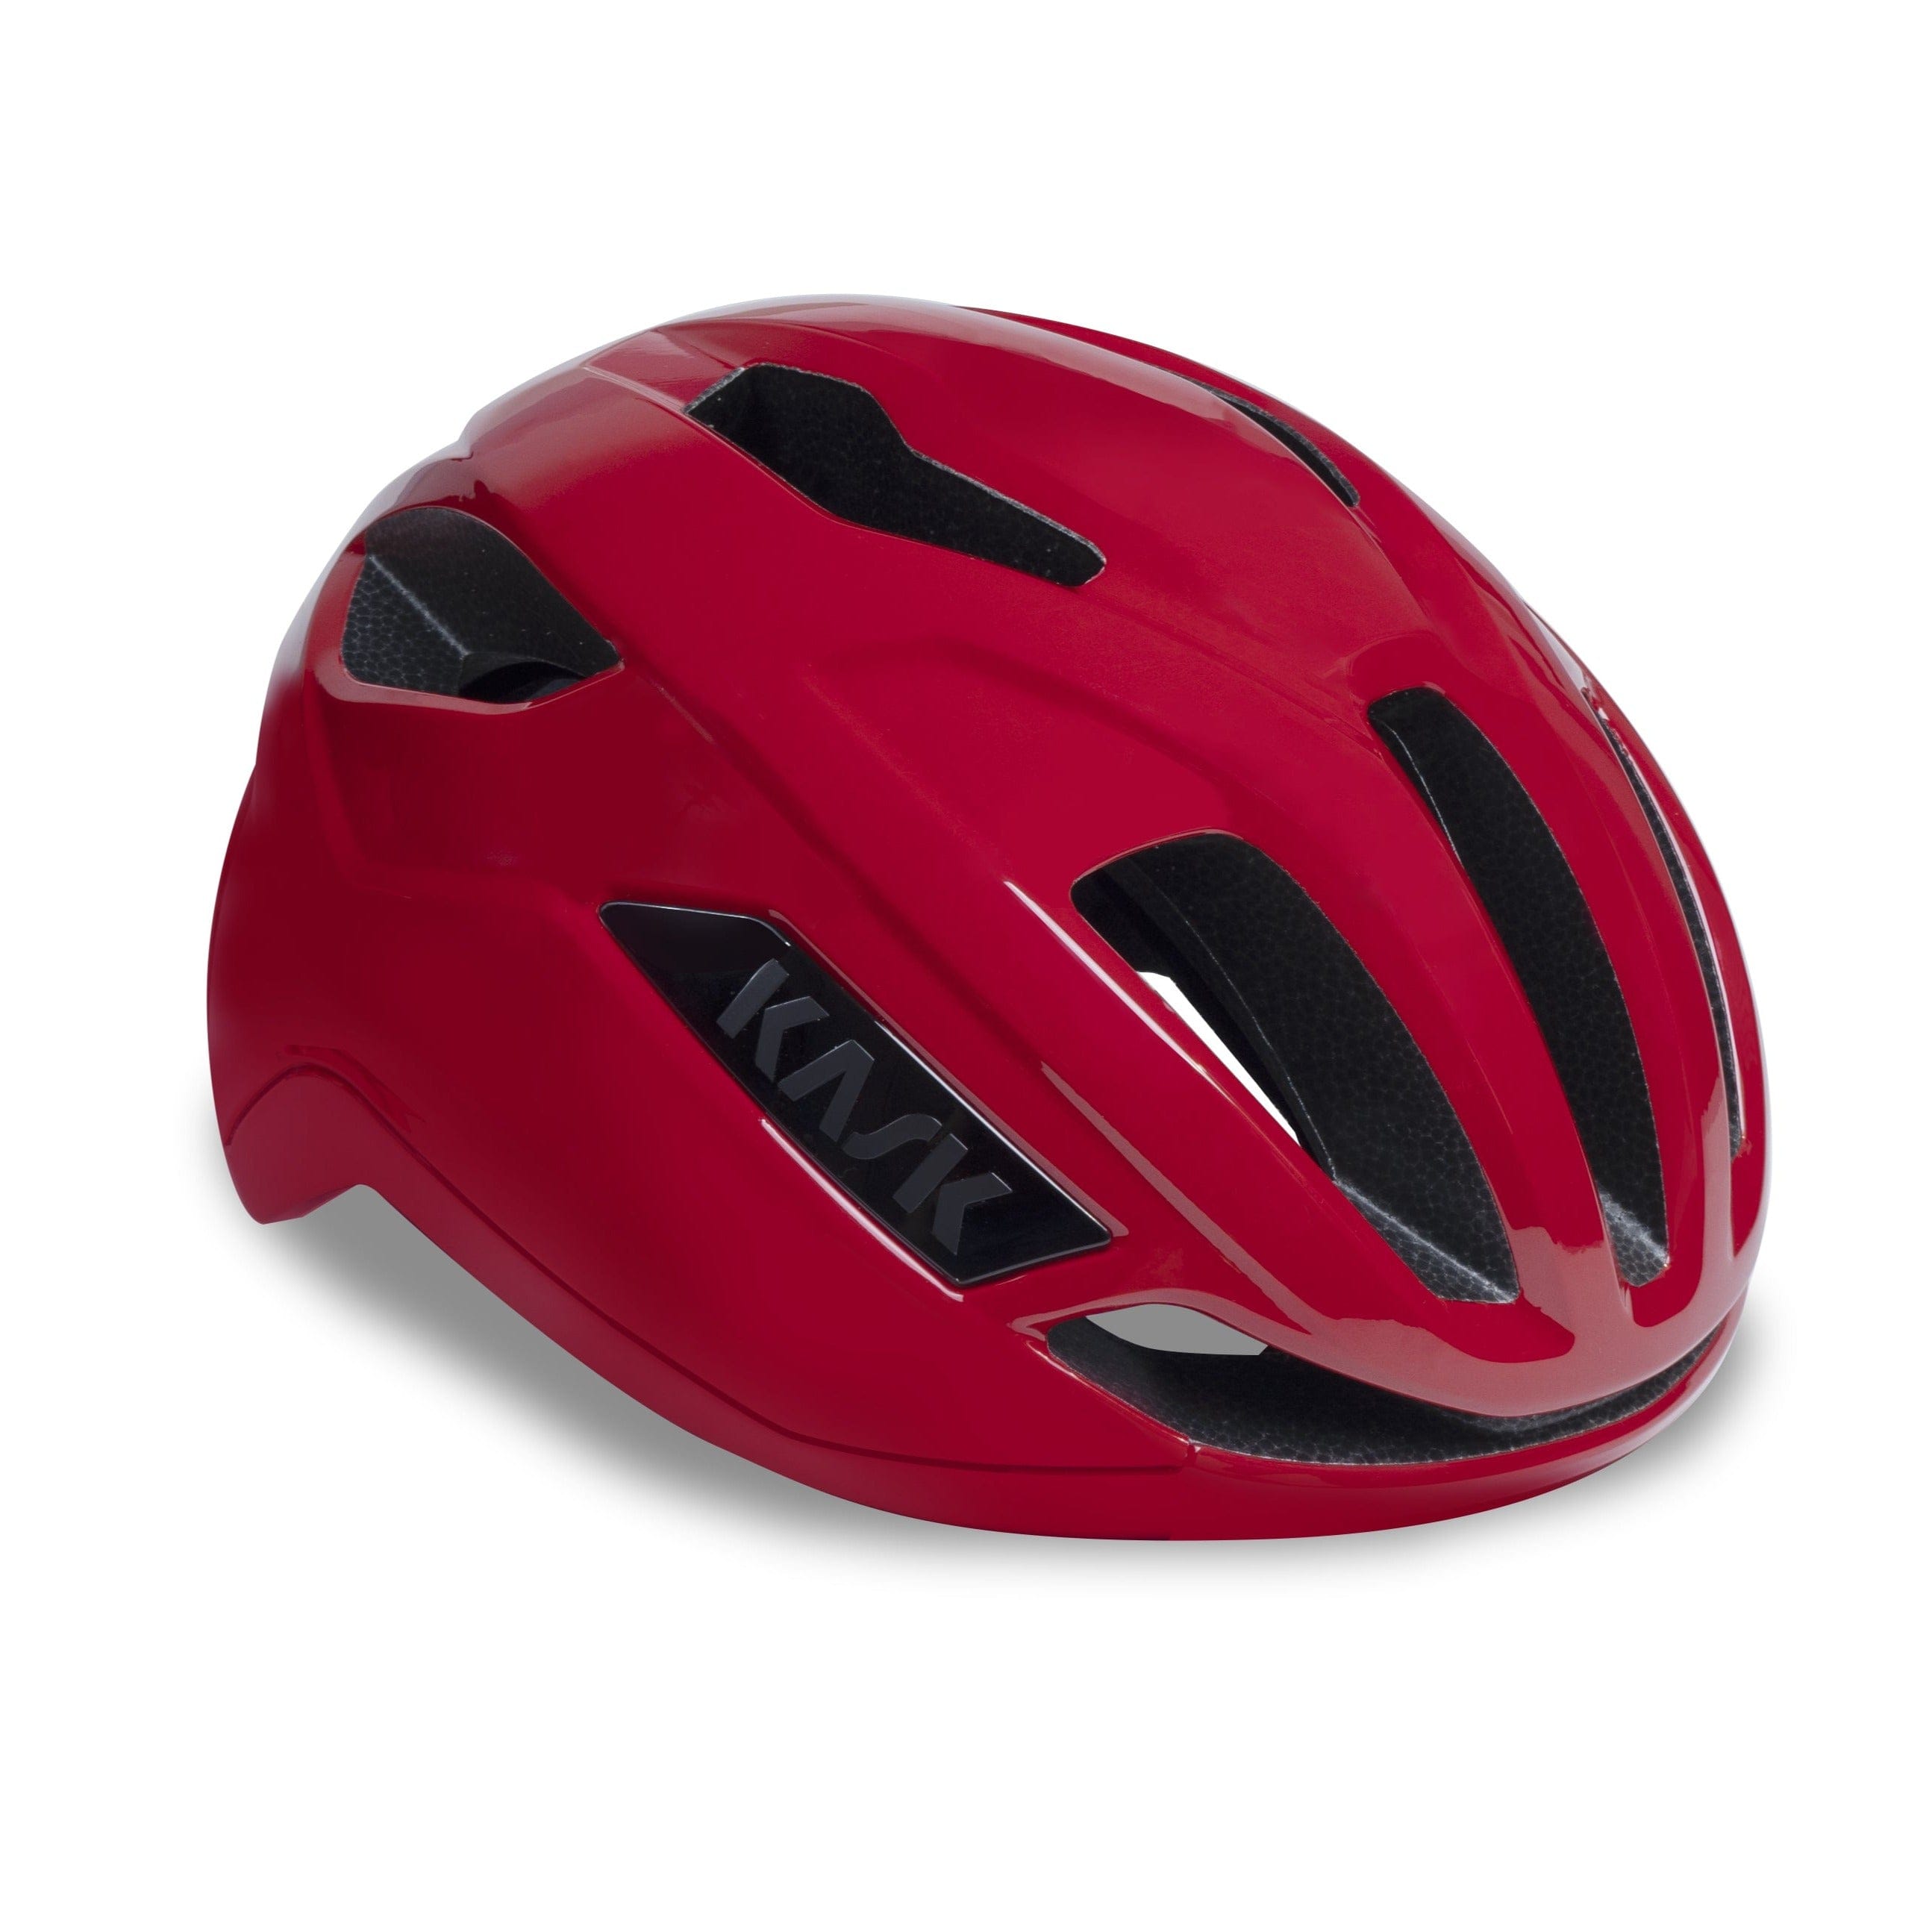 KASK Sintesi Helmet Red / Medium Apparel - Apparel Accessories - Helmets - Road